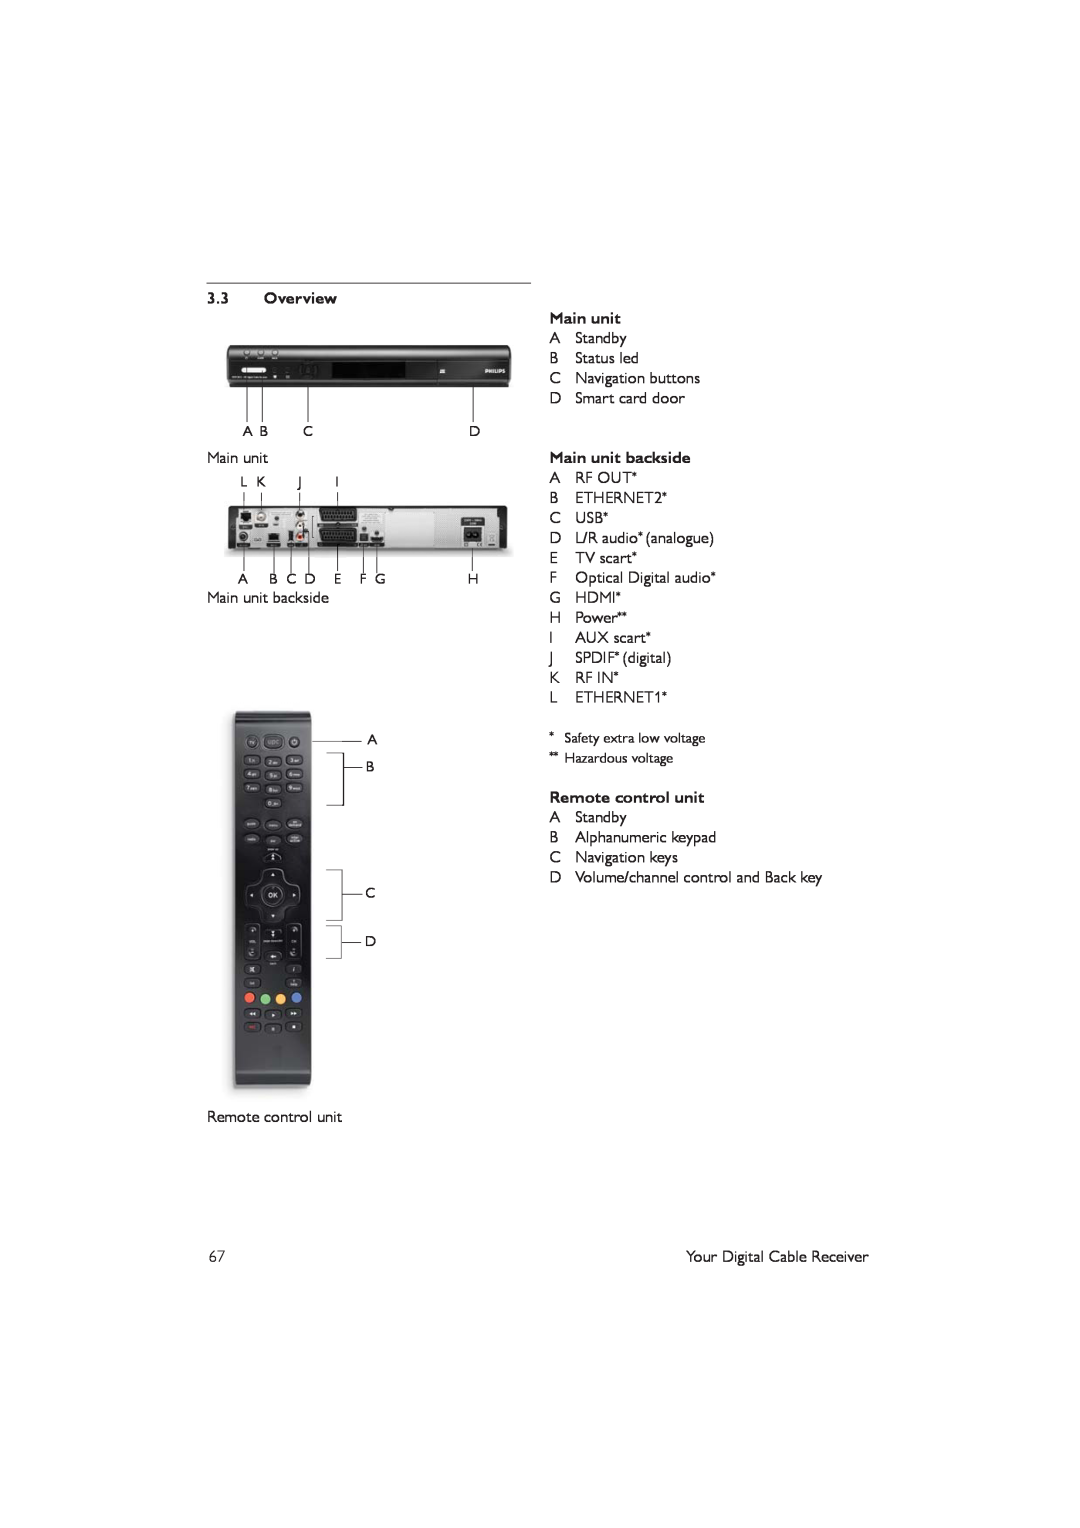 Philips DCR5012 manual 3.3Overview, Main unit backside, Remote control unit 